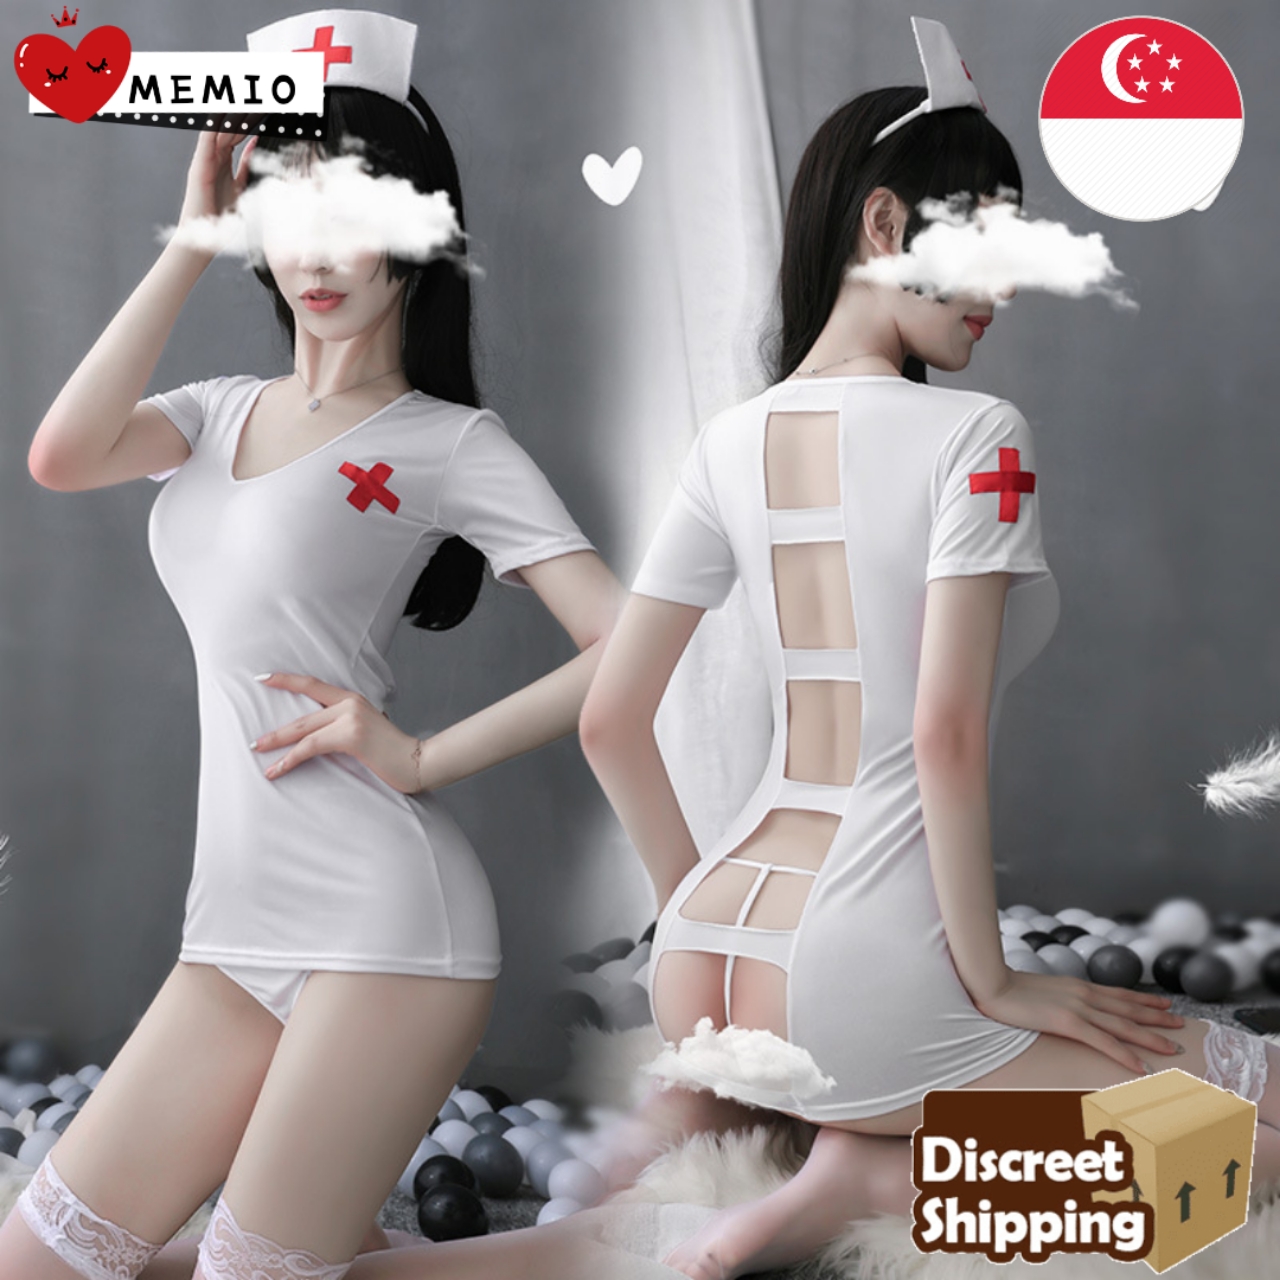 White Hot Nurse - SG Seller)Sexy Nurse Erotic Costume Erotic See Through Maid Lingerie Set  Porno Babydoll White Lace Underwear Women Role Play Nurse Uniform #7986 |  Lazada Singapore